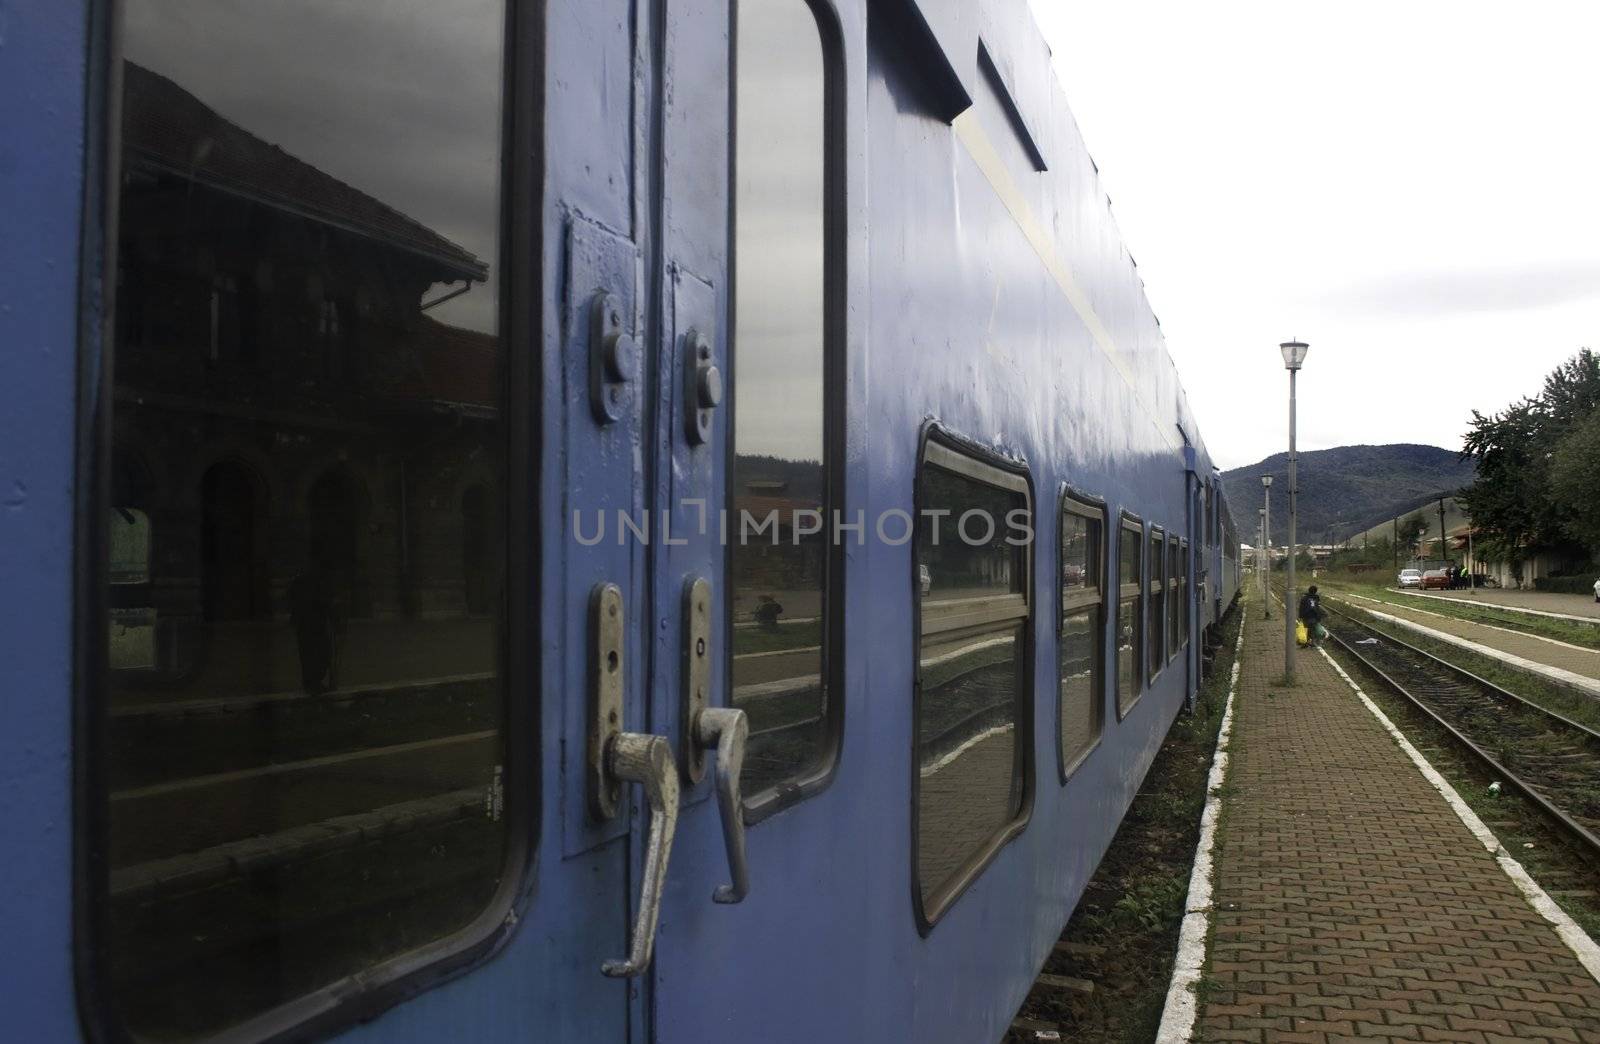 Passenger train by timscottrom